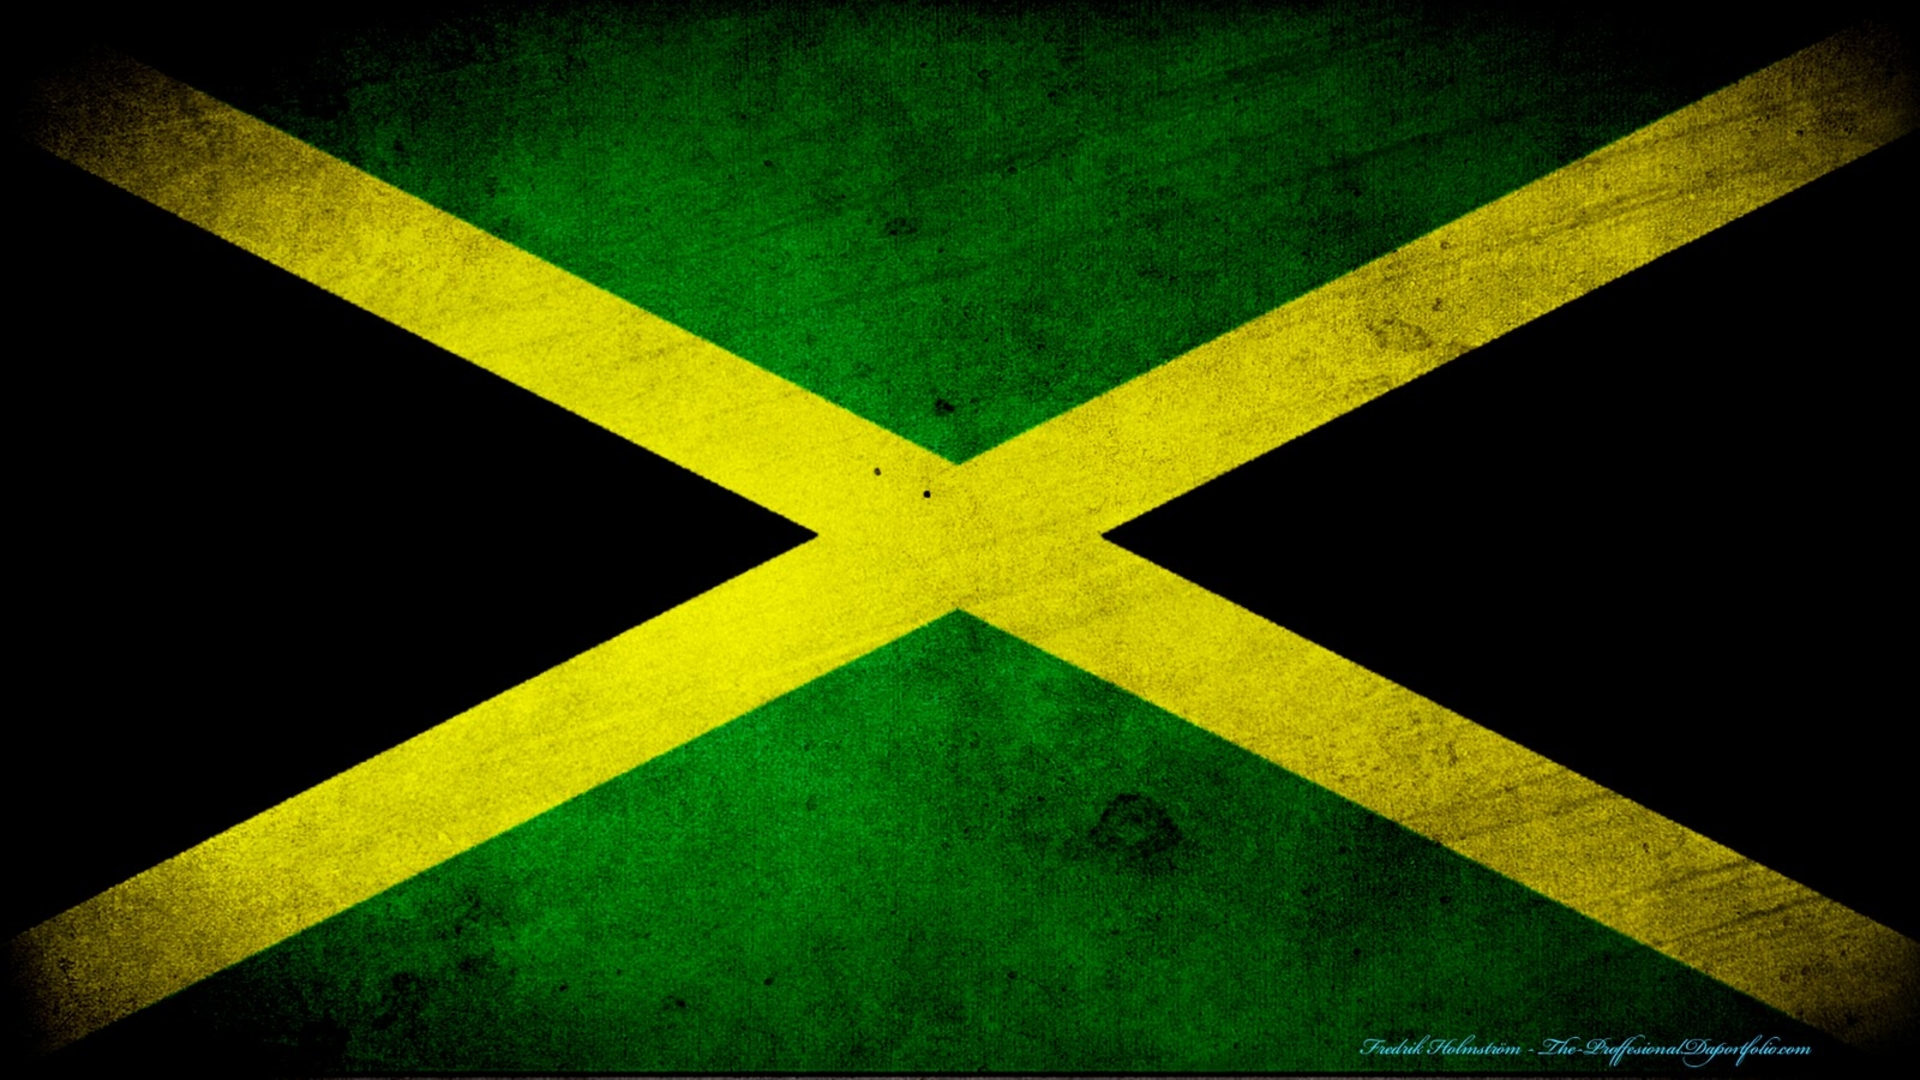 Desktop Wallpaper Jamaica Flag Grunge By The Proffesional